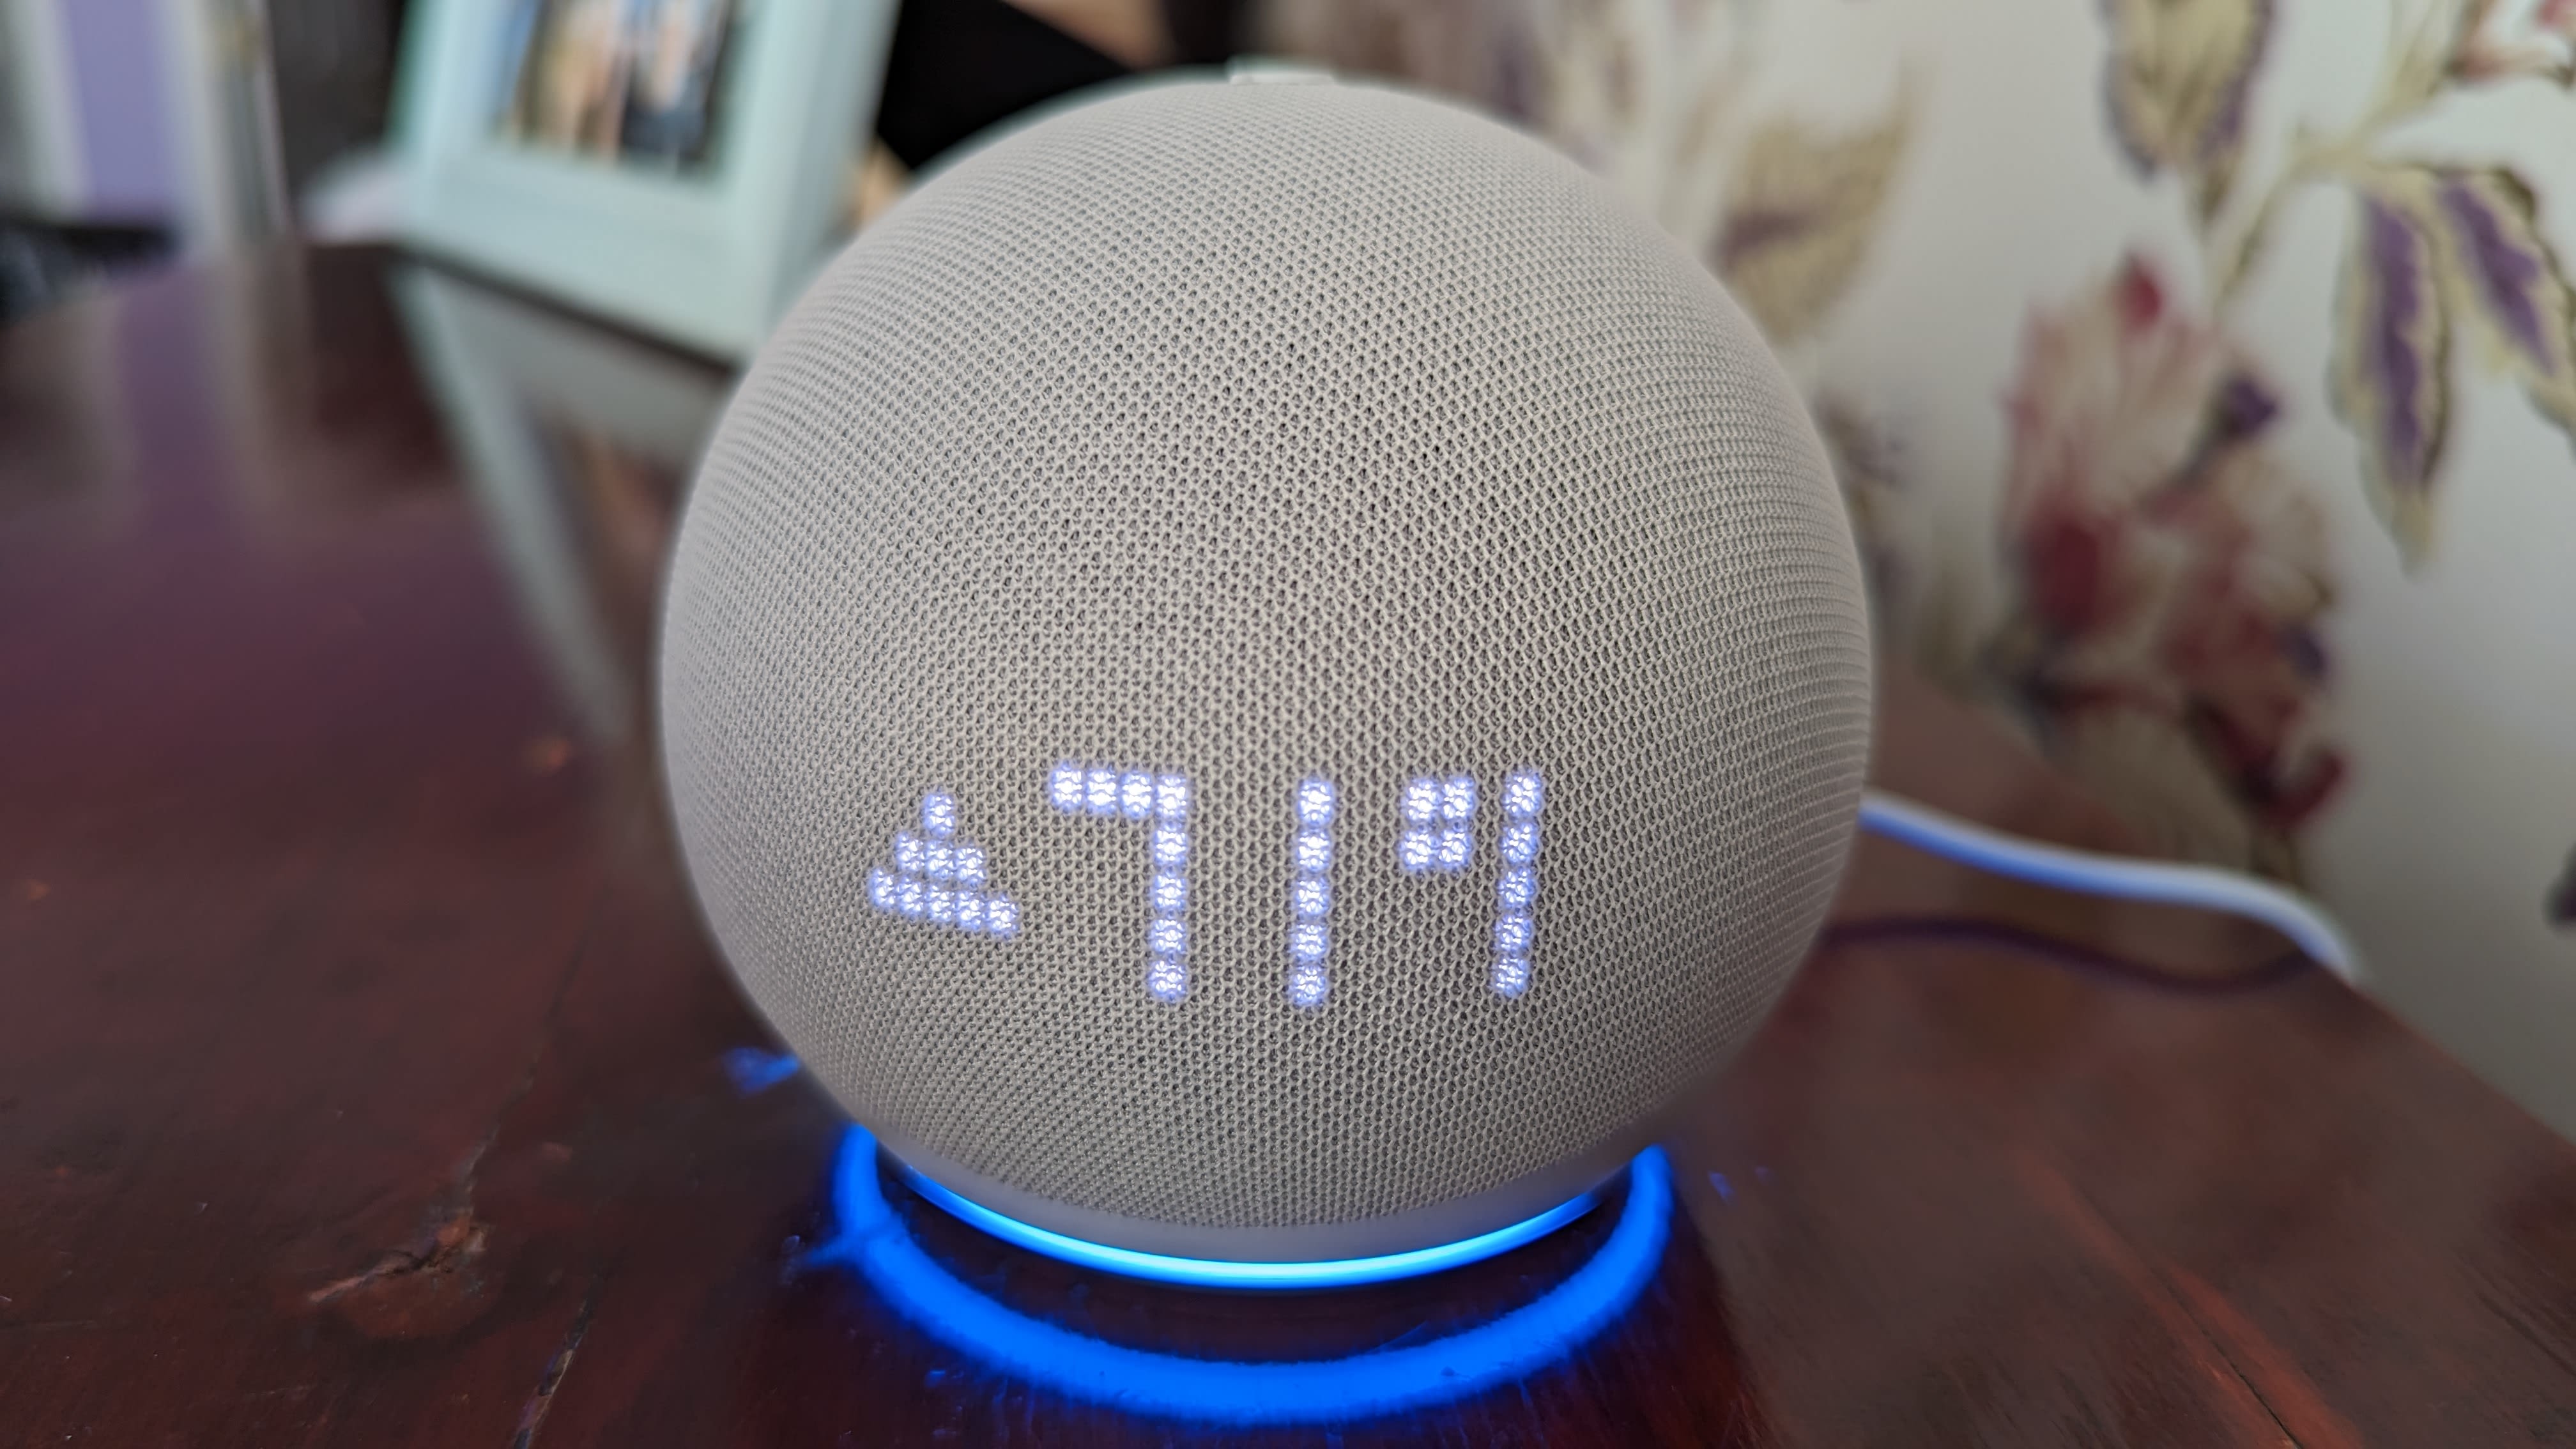 Echo Dot 5th Gen with CLOCK Smart speaker with Alexa